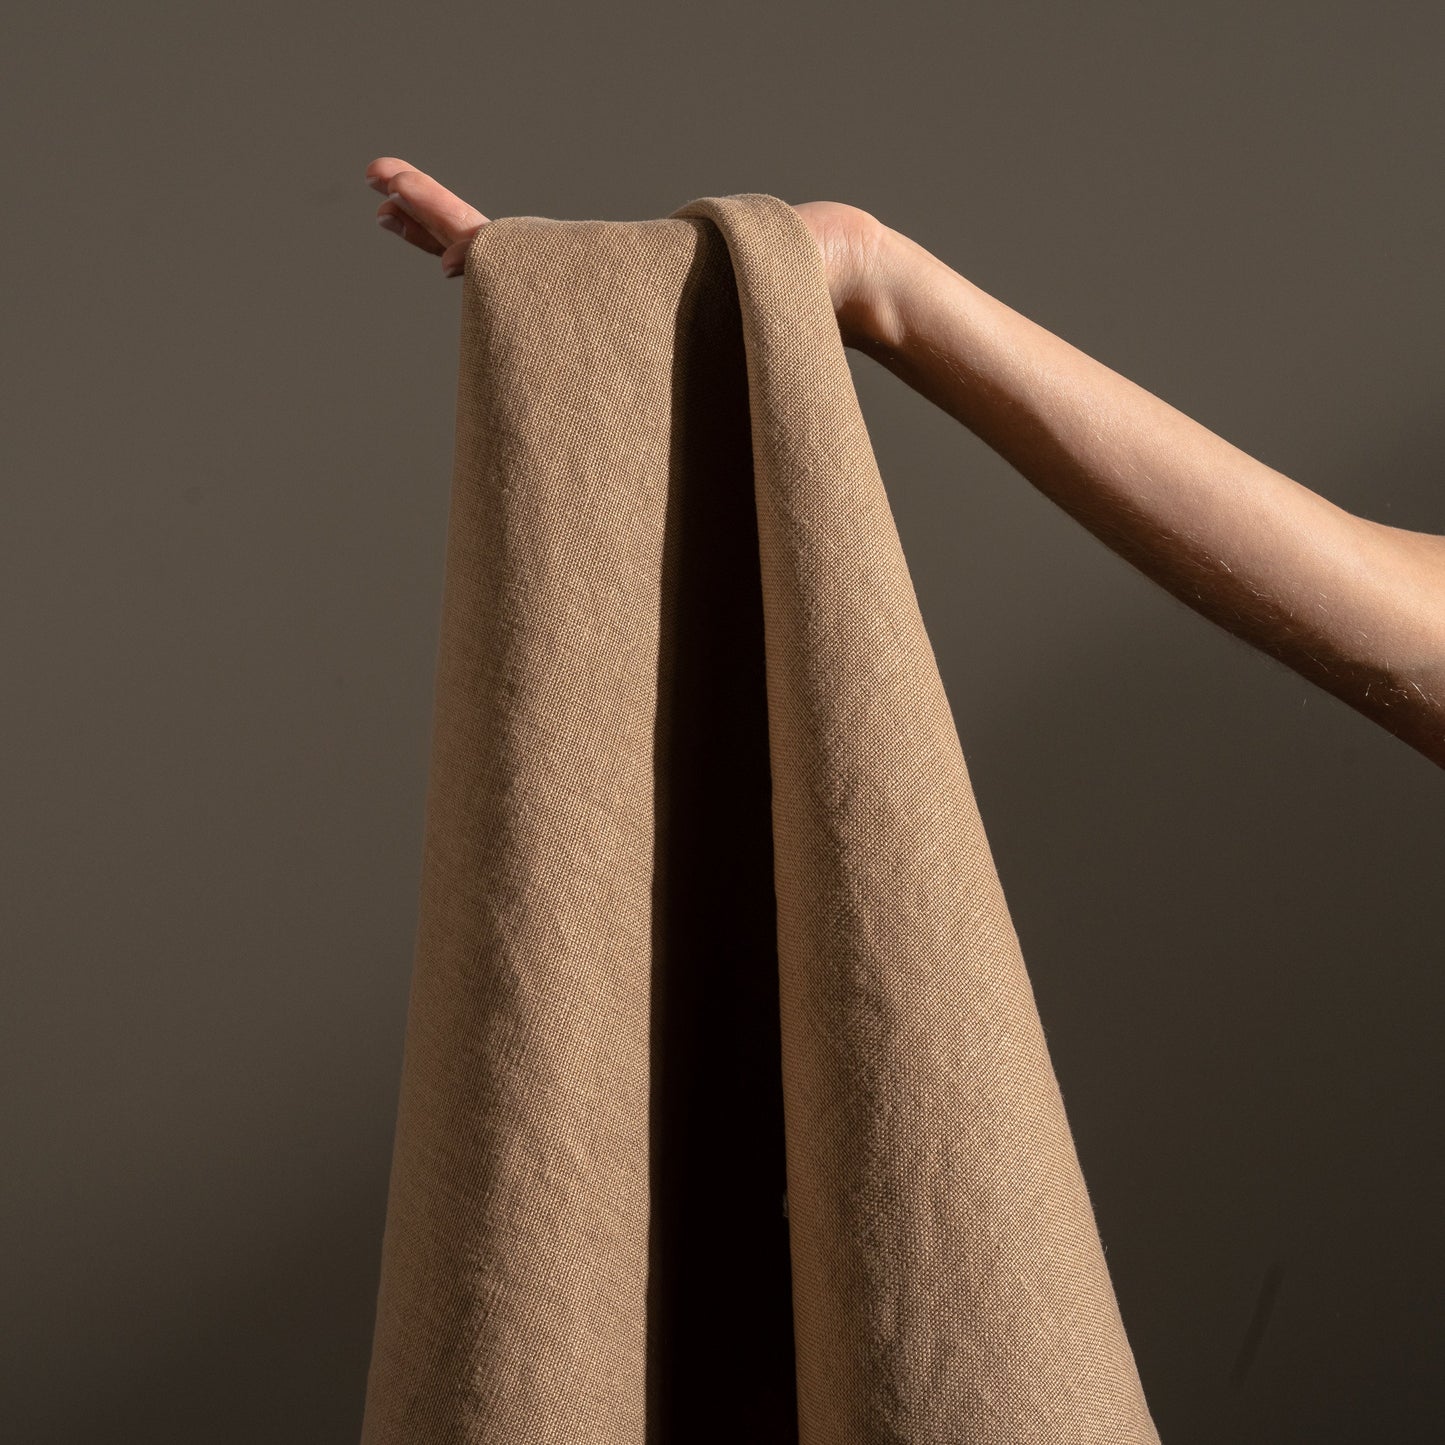 12 oz/sq yard 100% Upholstery/ Slipcover Weight Linen in Hazelnut